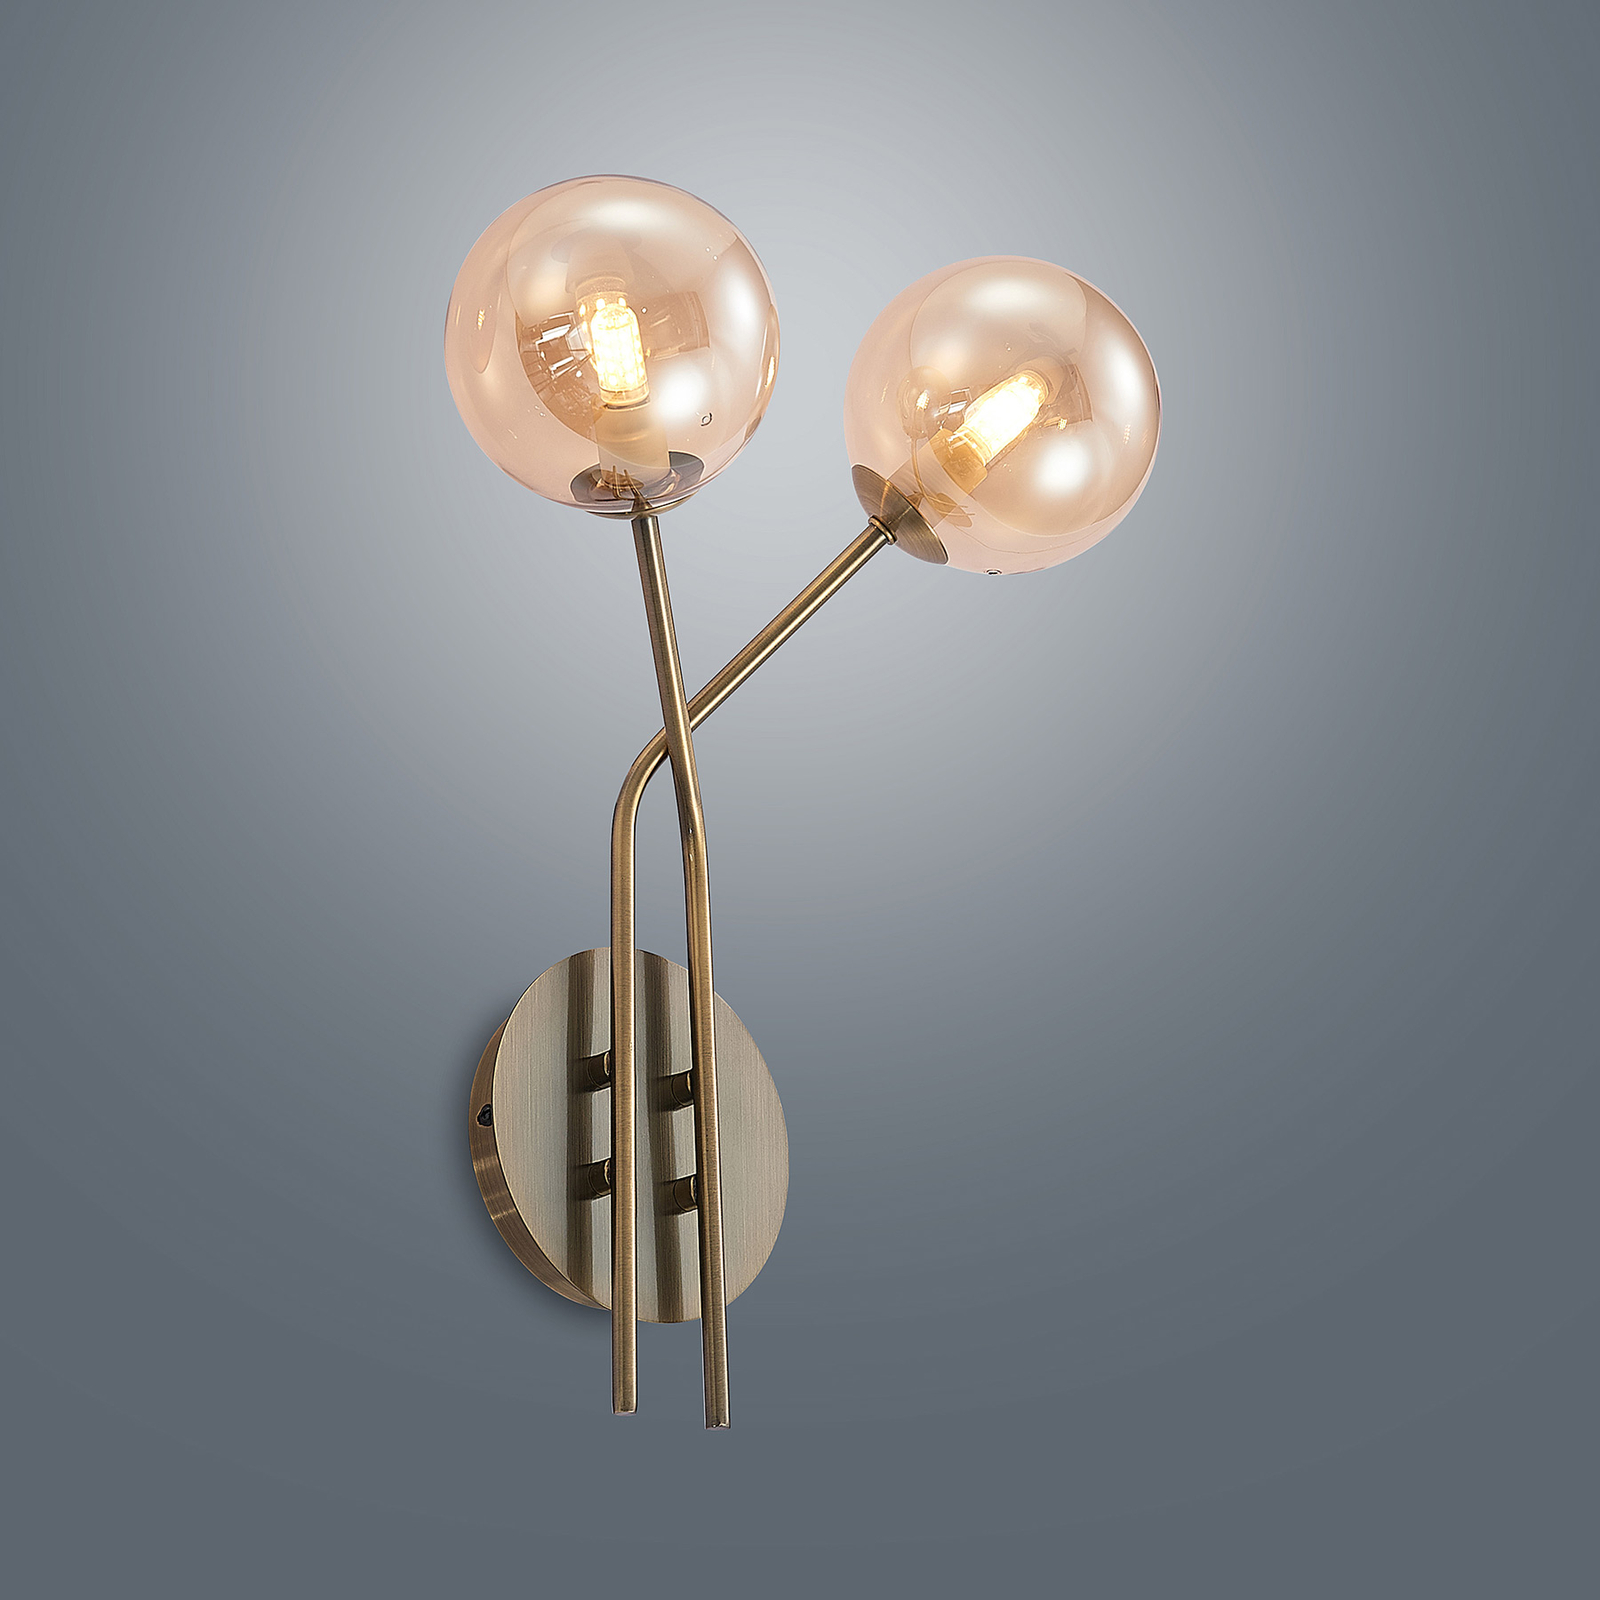 Lucande Wynona wall light, two-bulb antique brass